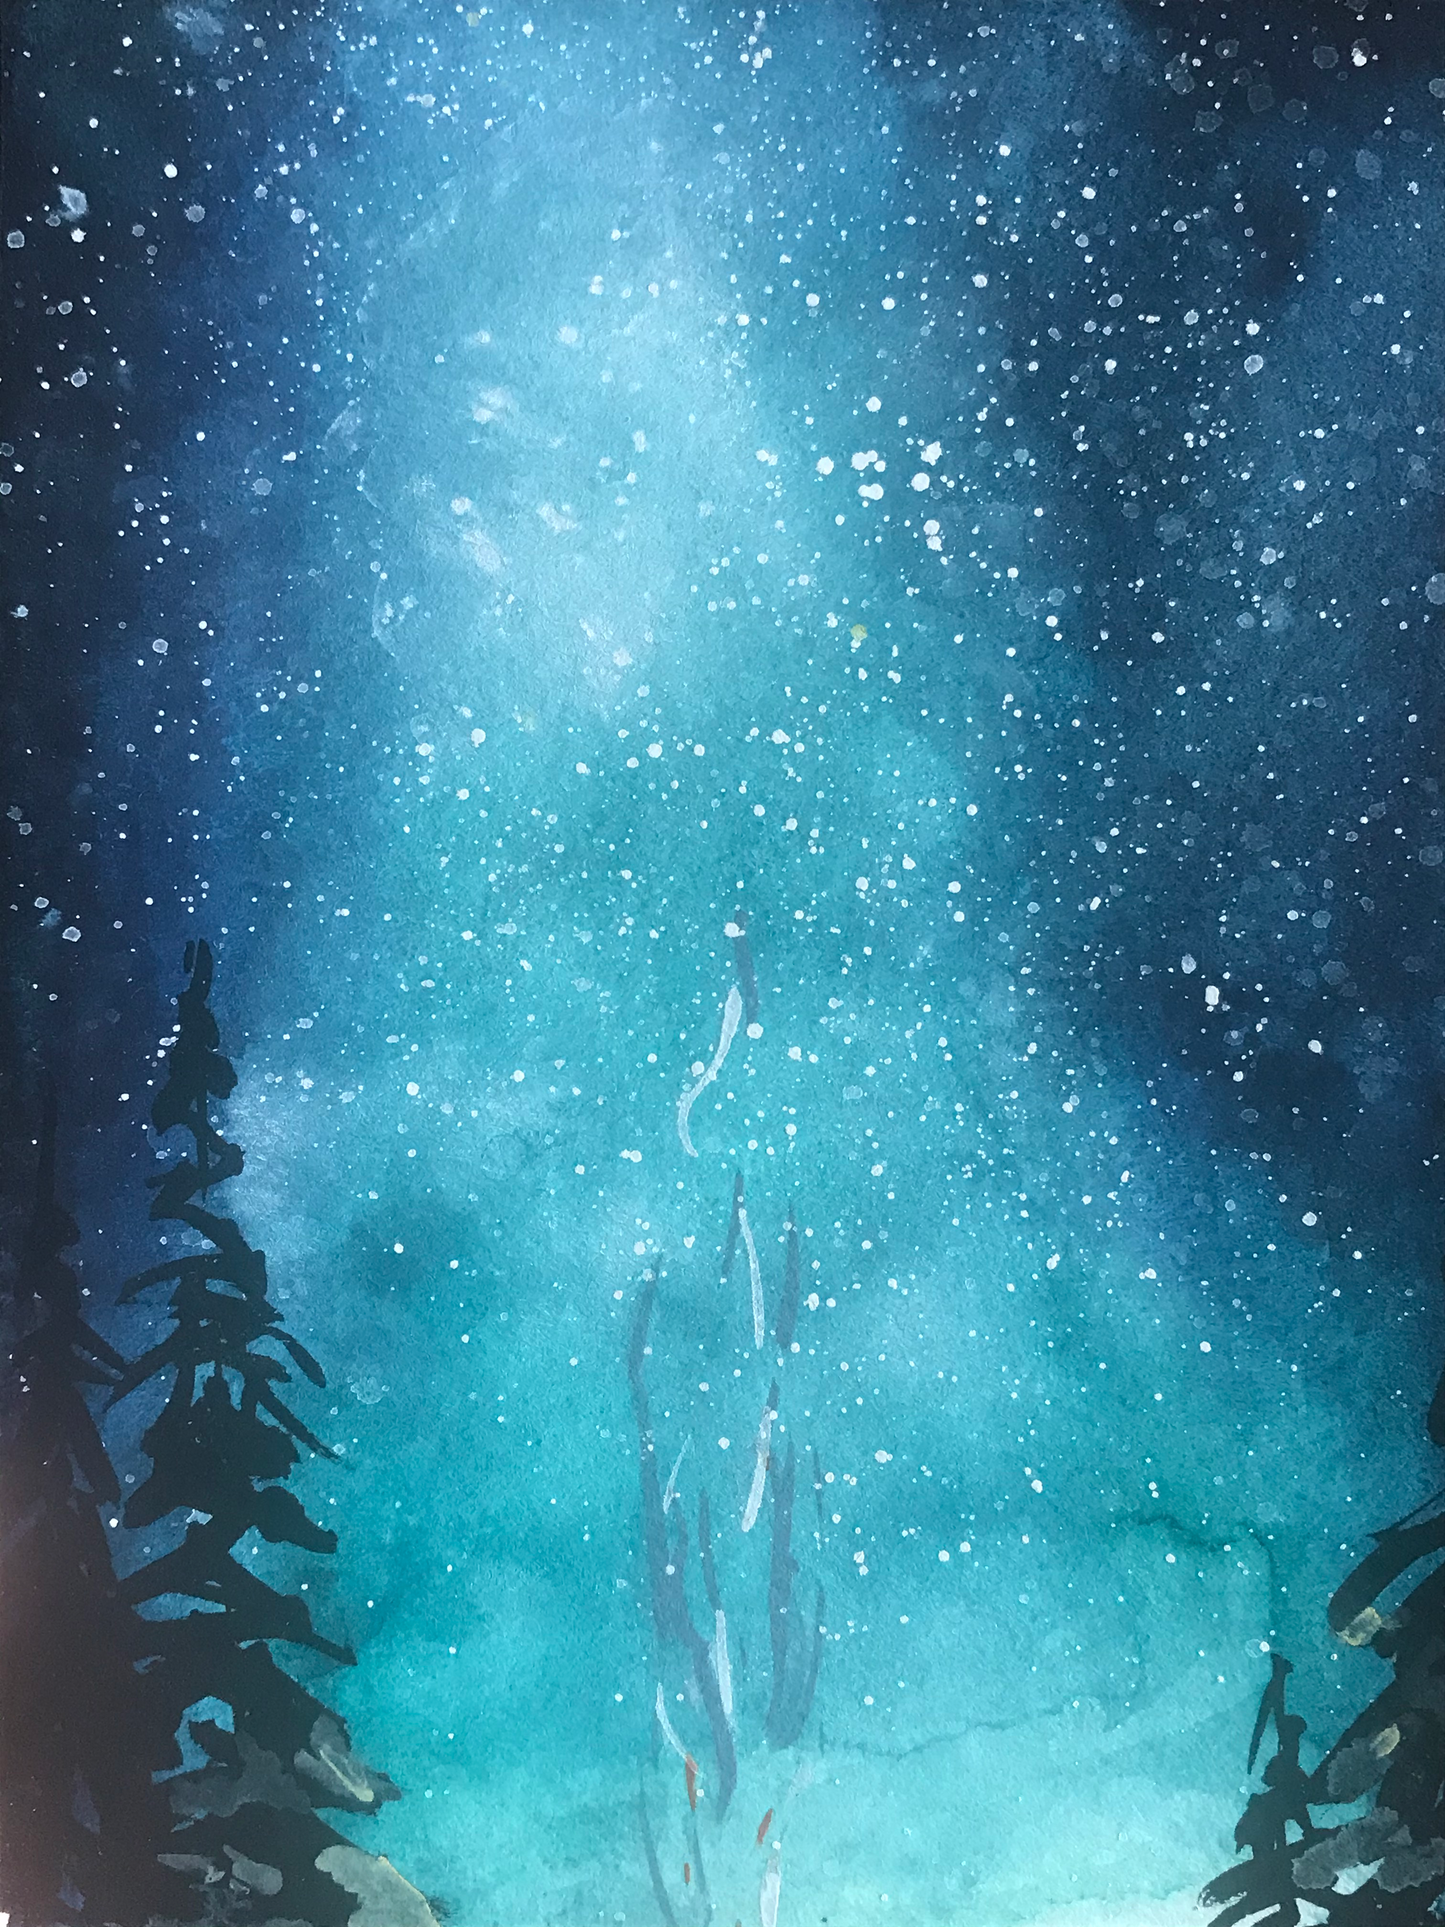 Campfire Under Night Sky - Original Watercolor Painting